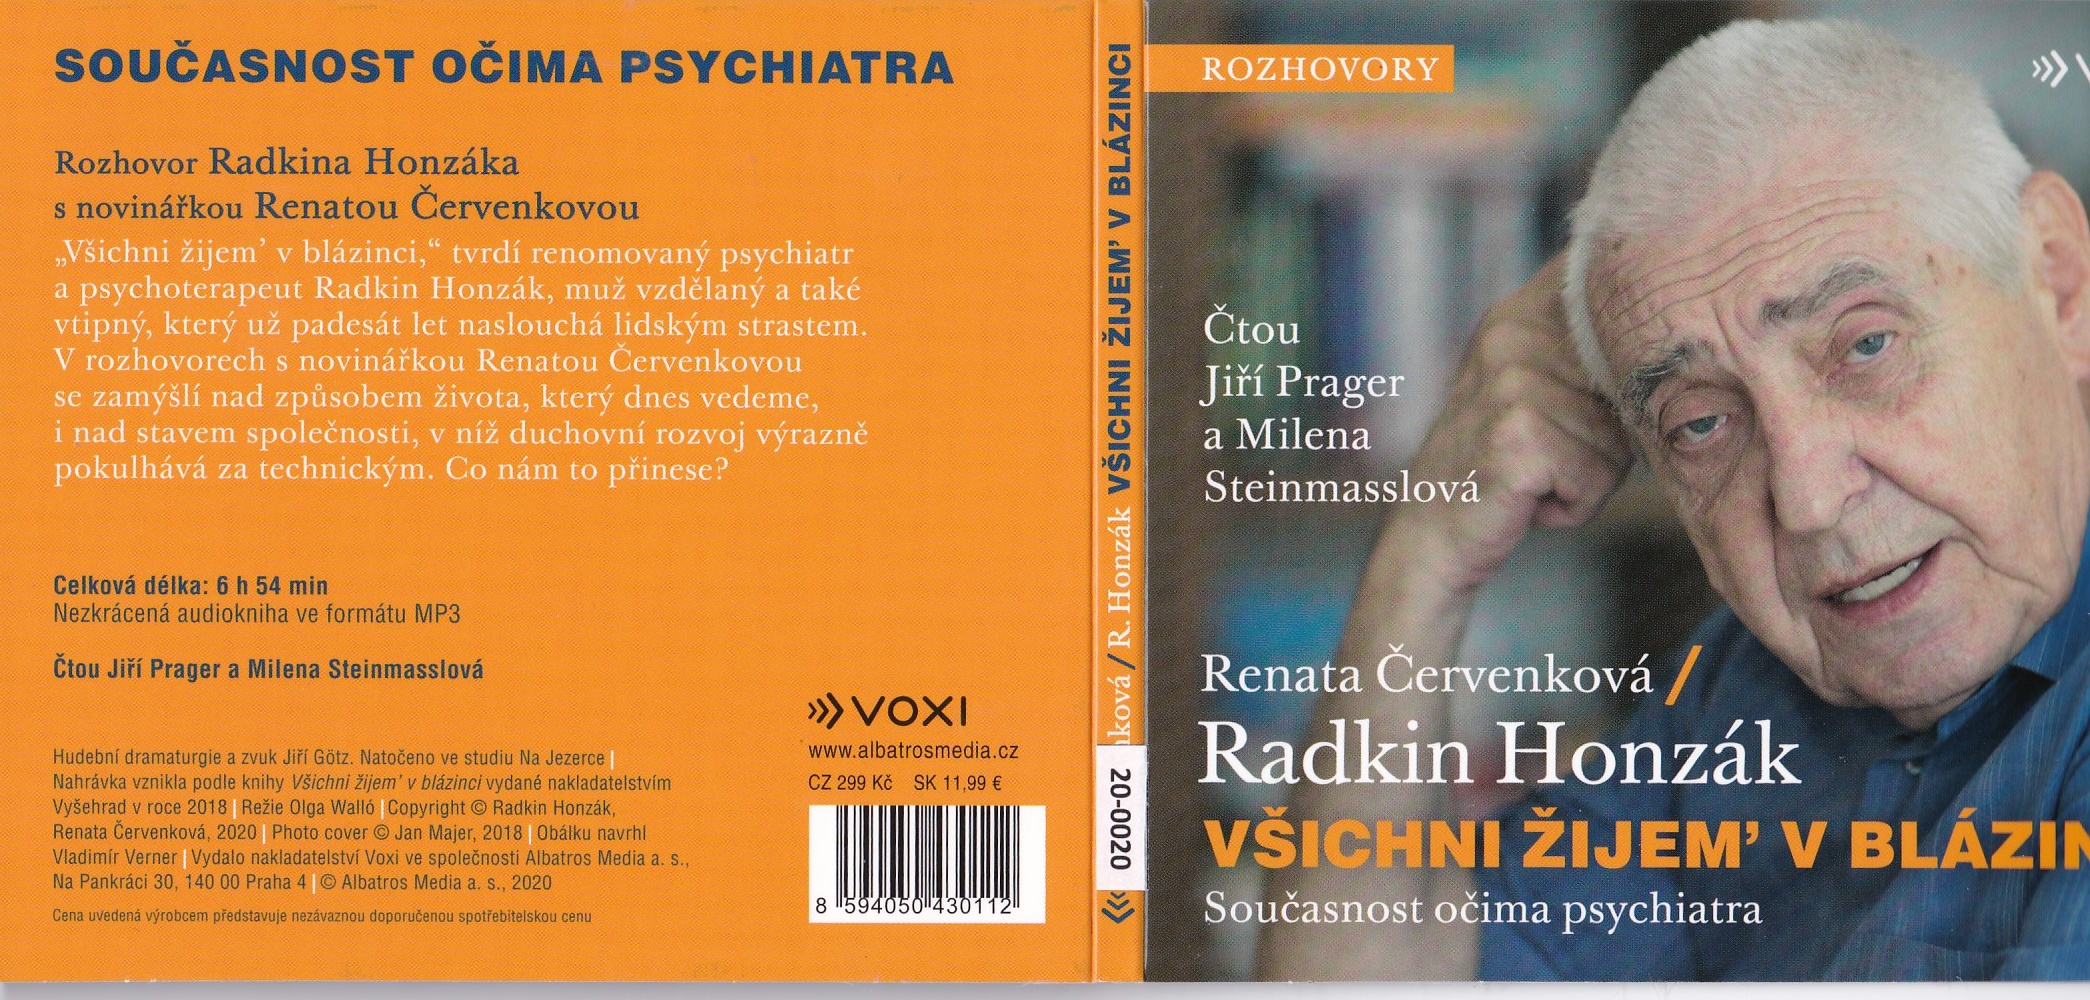 Renata Červenková a Radkin Honzák: šichni žijem v blázinci - Současnost očima psychiatra; 